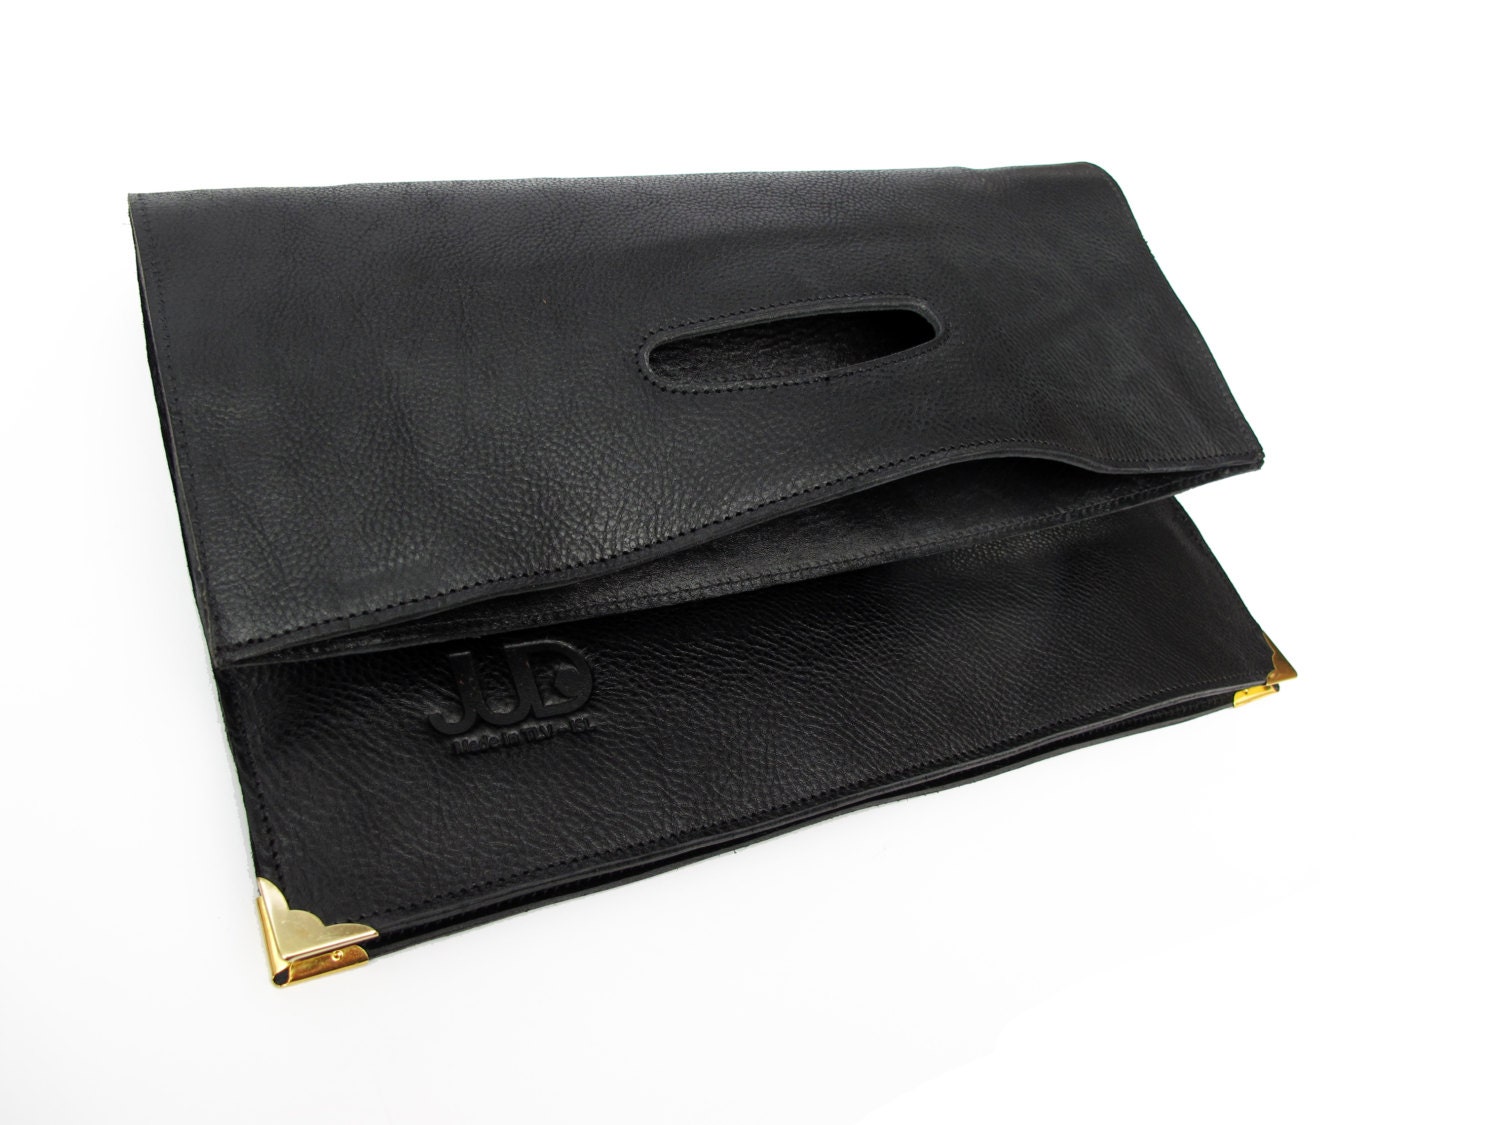 Leather hand bag, Clutch, Black color, JUD Hand made, Premium , Hipster ,leptop, Luxury Bag - JUDtlv